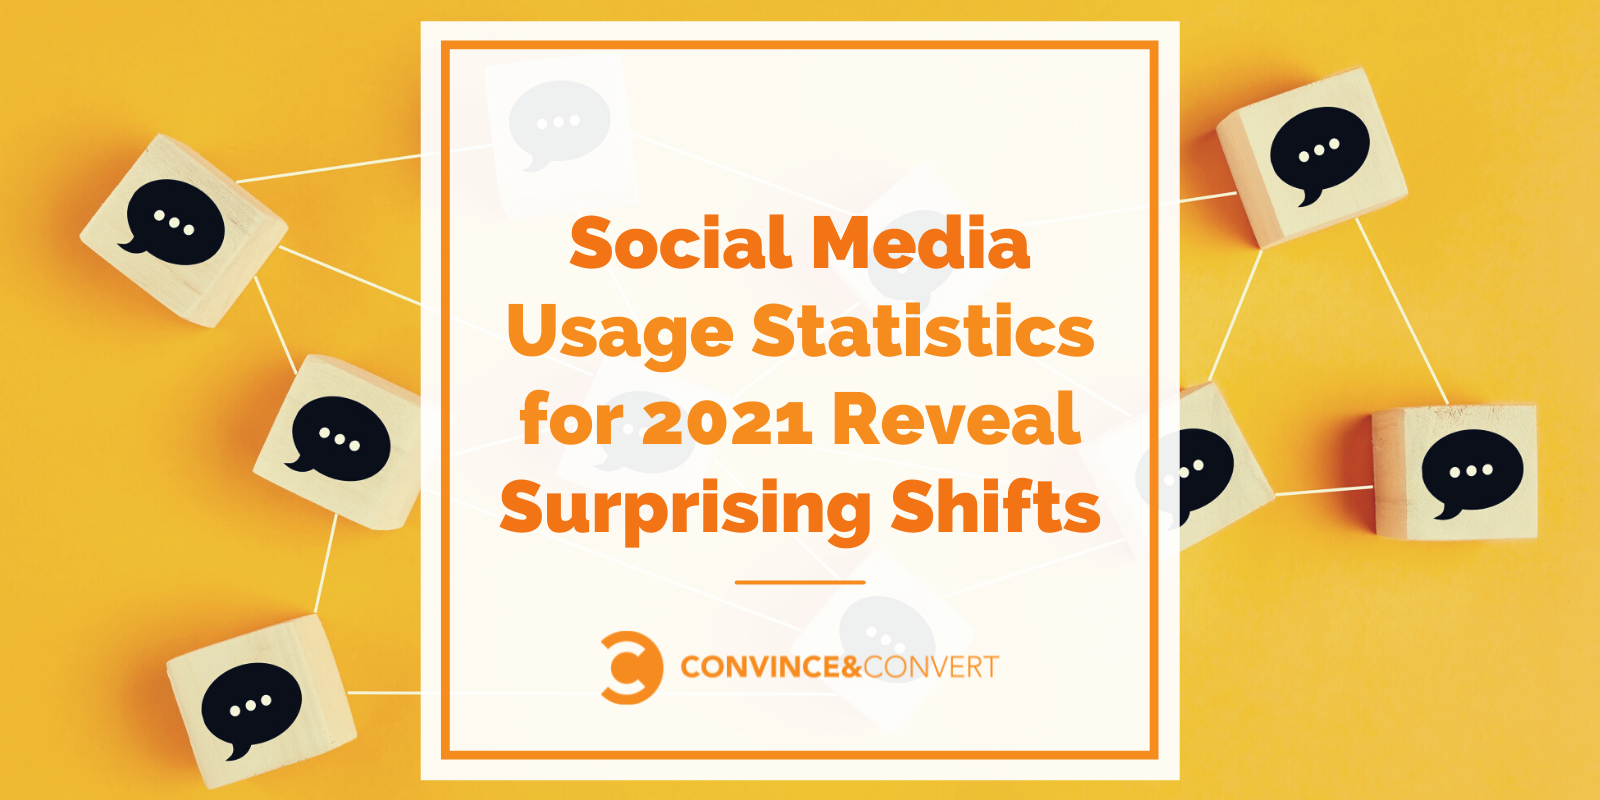 Social Media Usage Statistics for 2021 Display Shocking Shifts